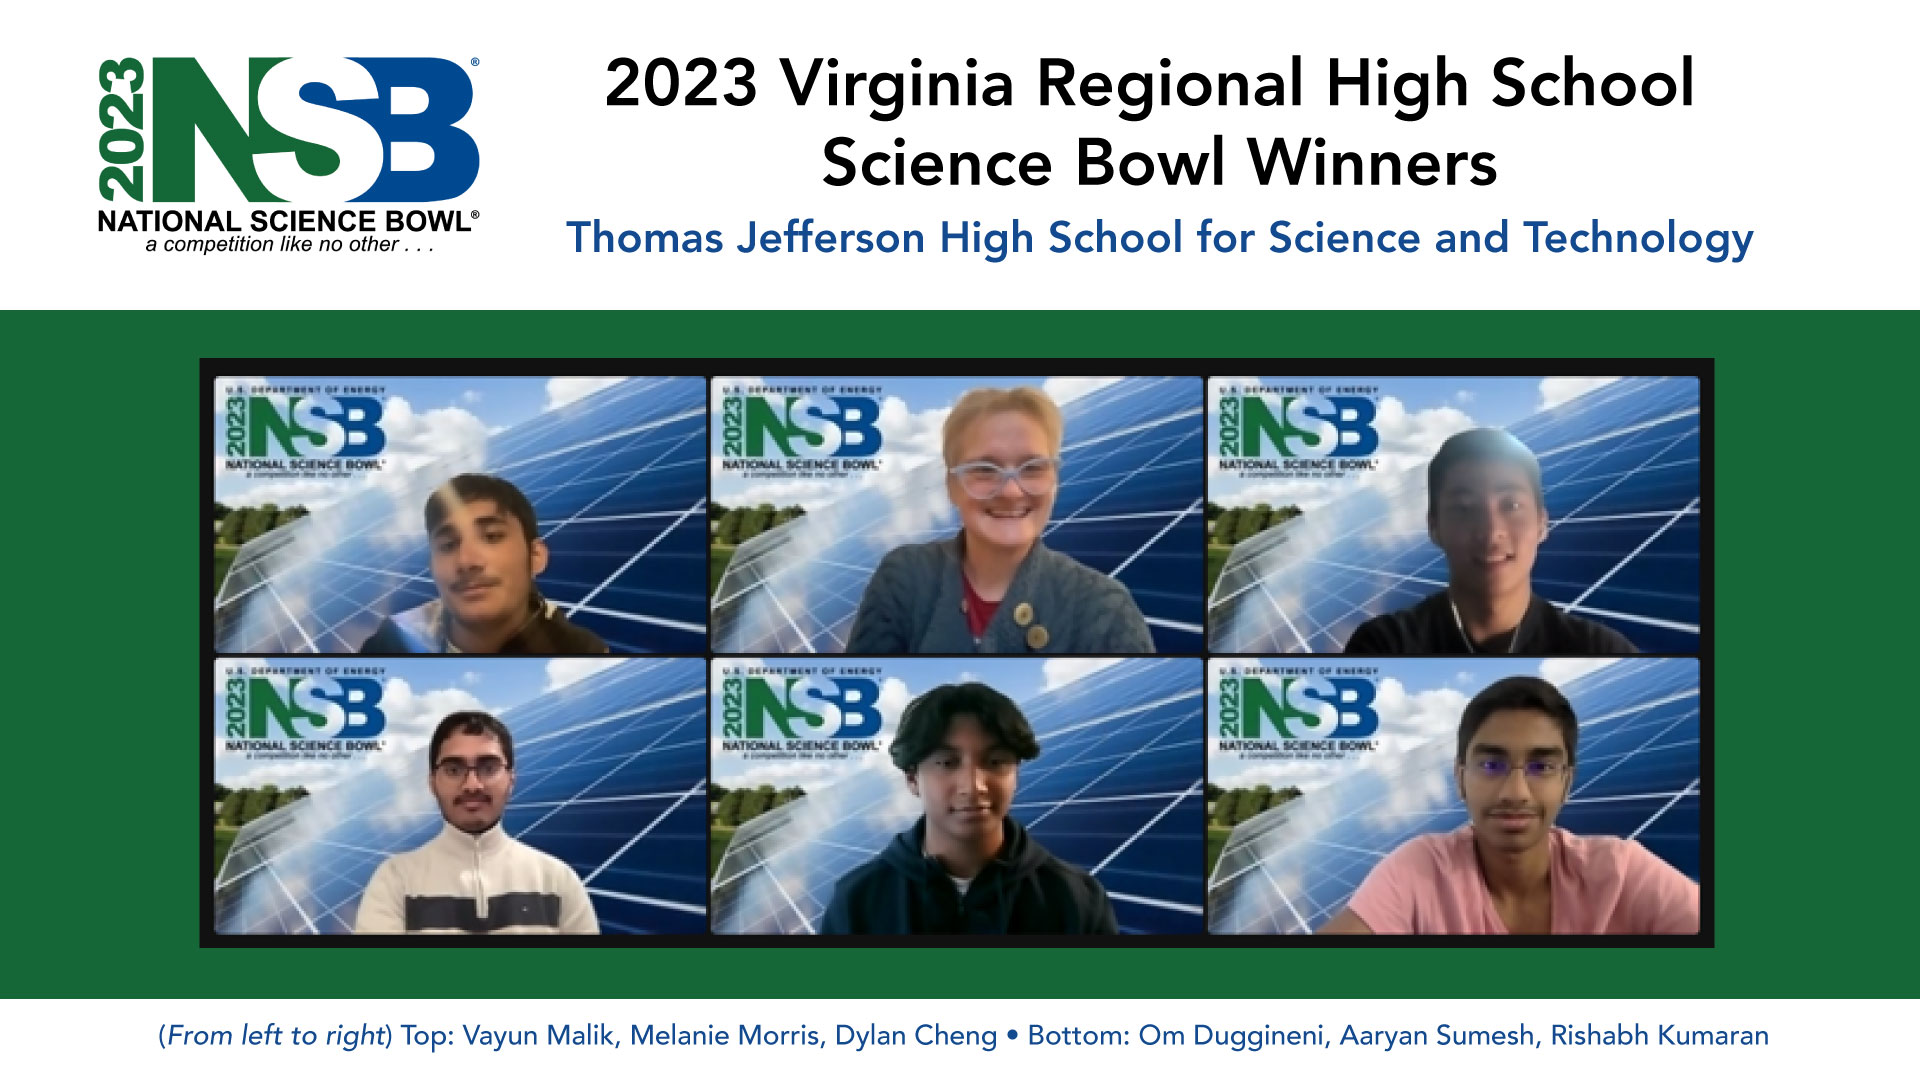 Va. Regional HS Science Bowl 2023 winning team: Top: Vayun Malik, Melanie Morris (coach), and Dylan Cheng ; Bottom: Om Duggineni, Aaryan Sumesh, and Rishabh Kumaran